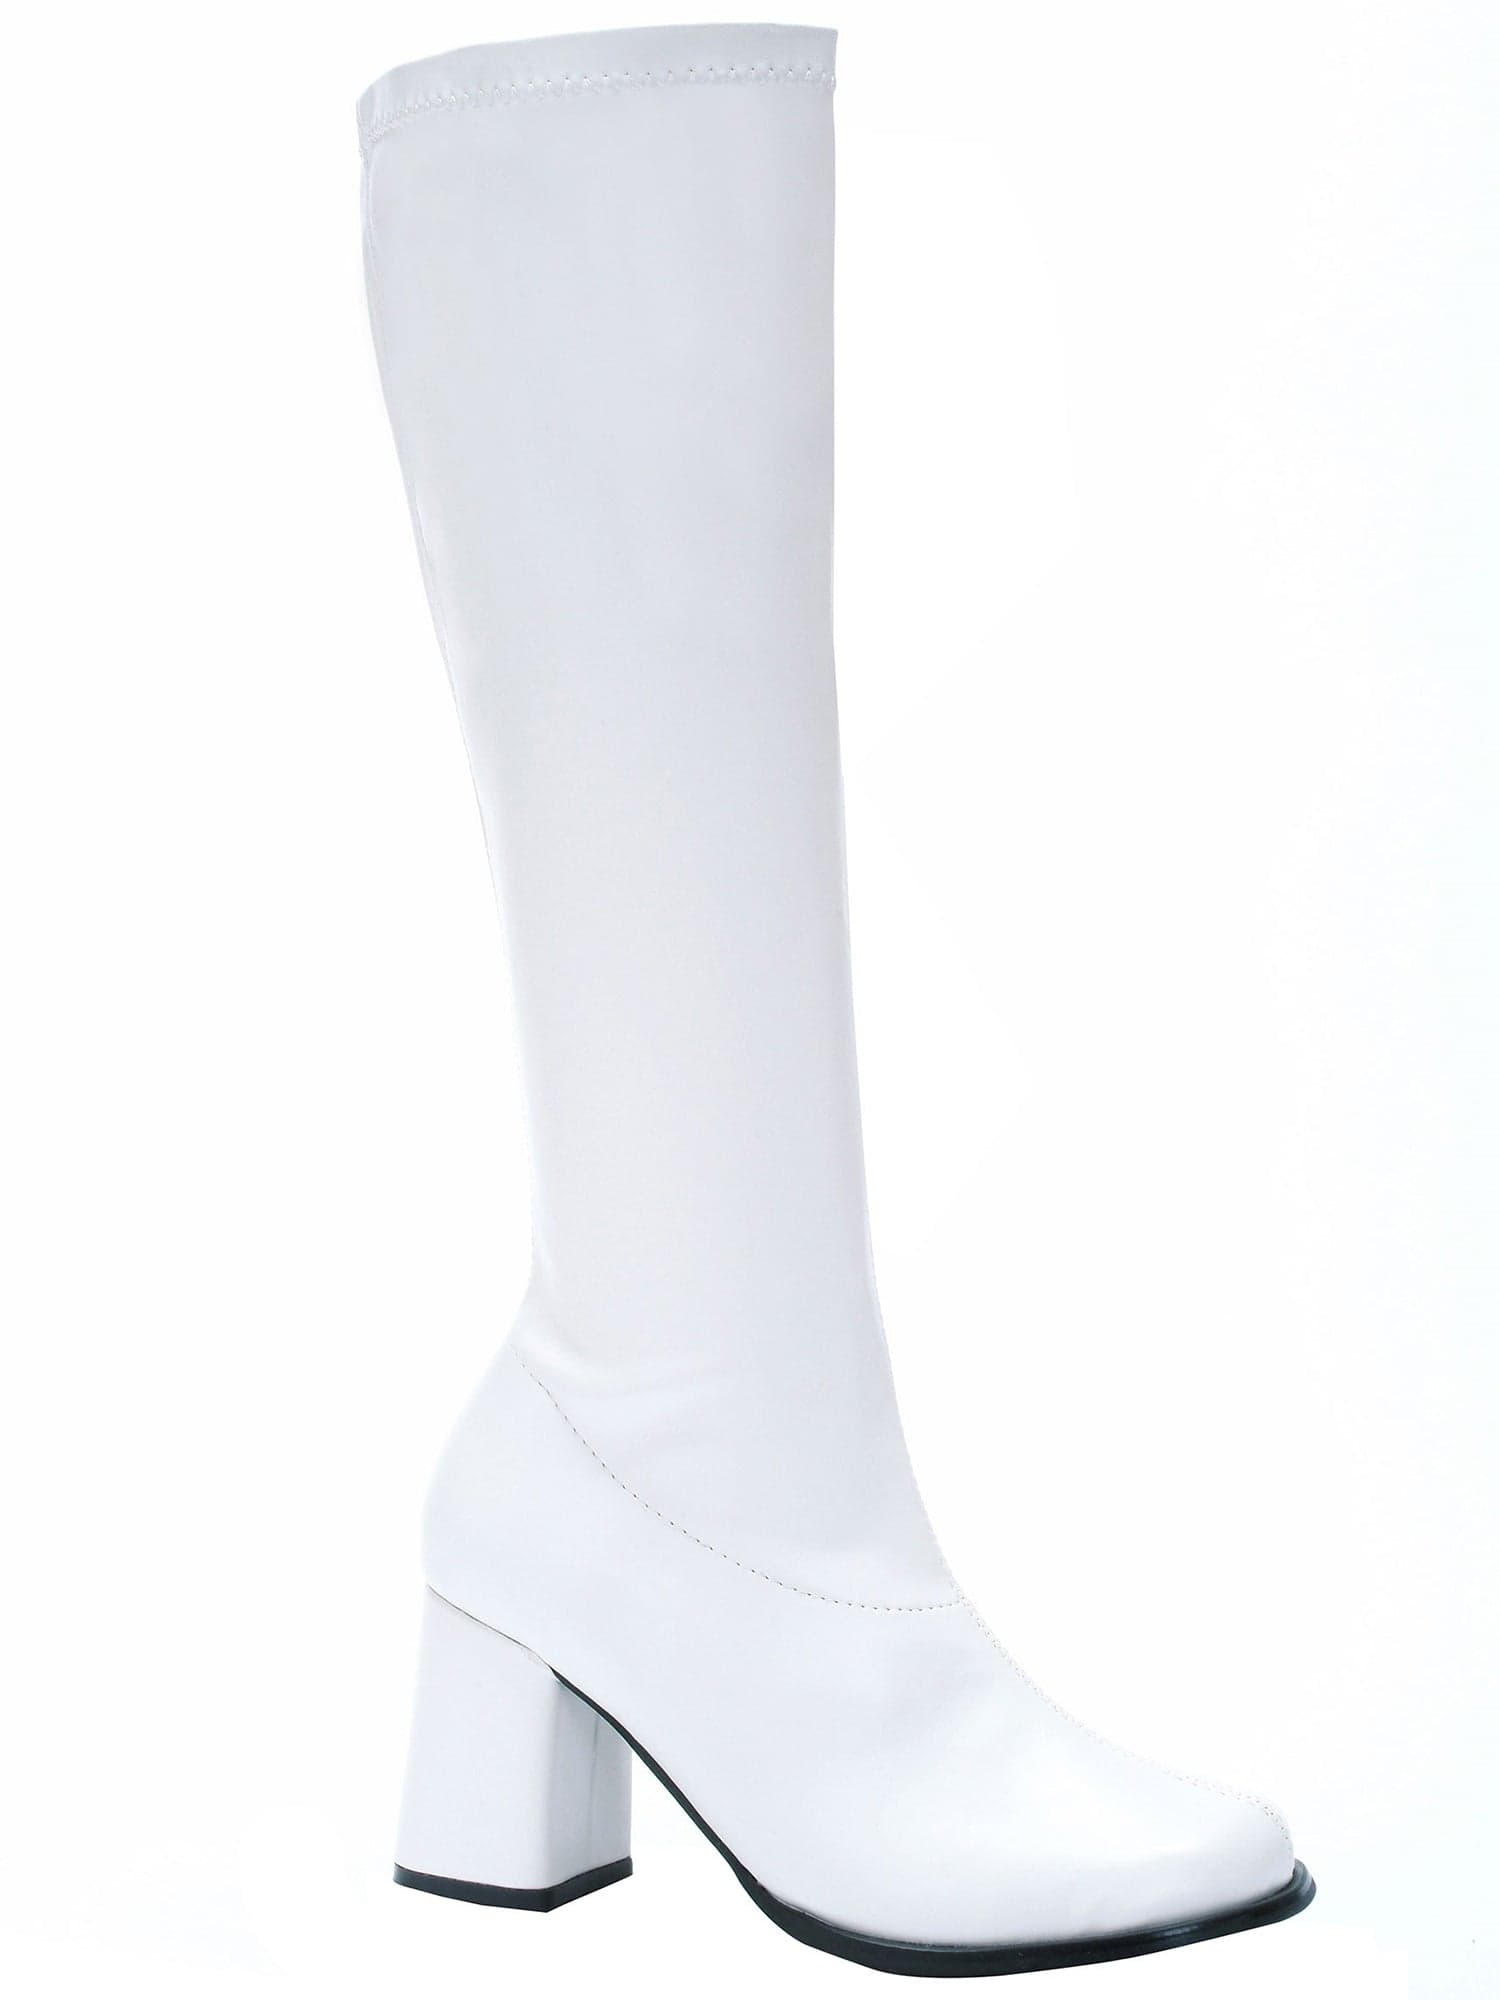 Adult White Patent Go Go Boots - costumes.com